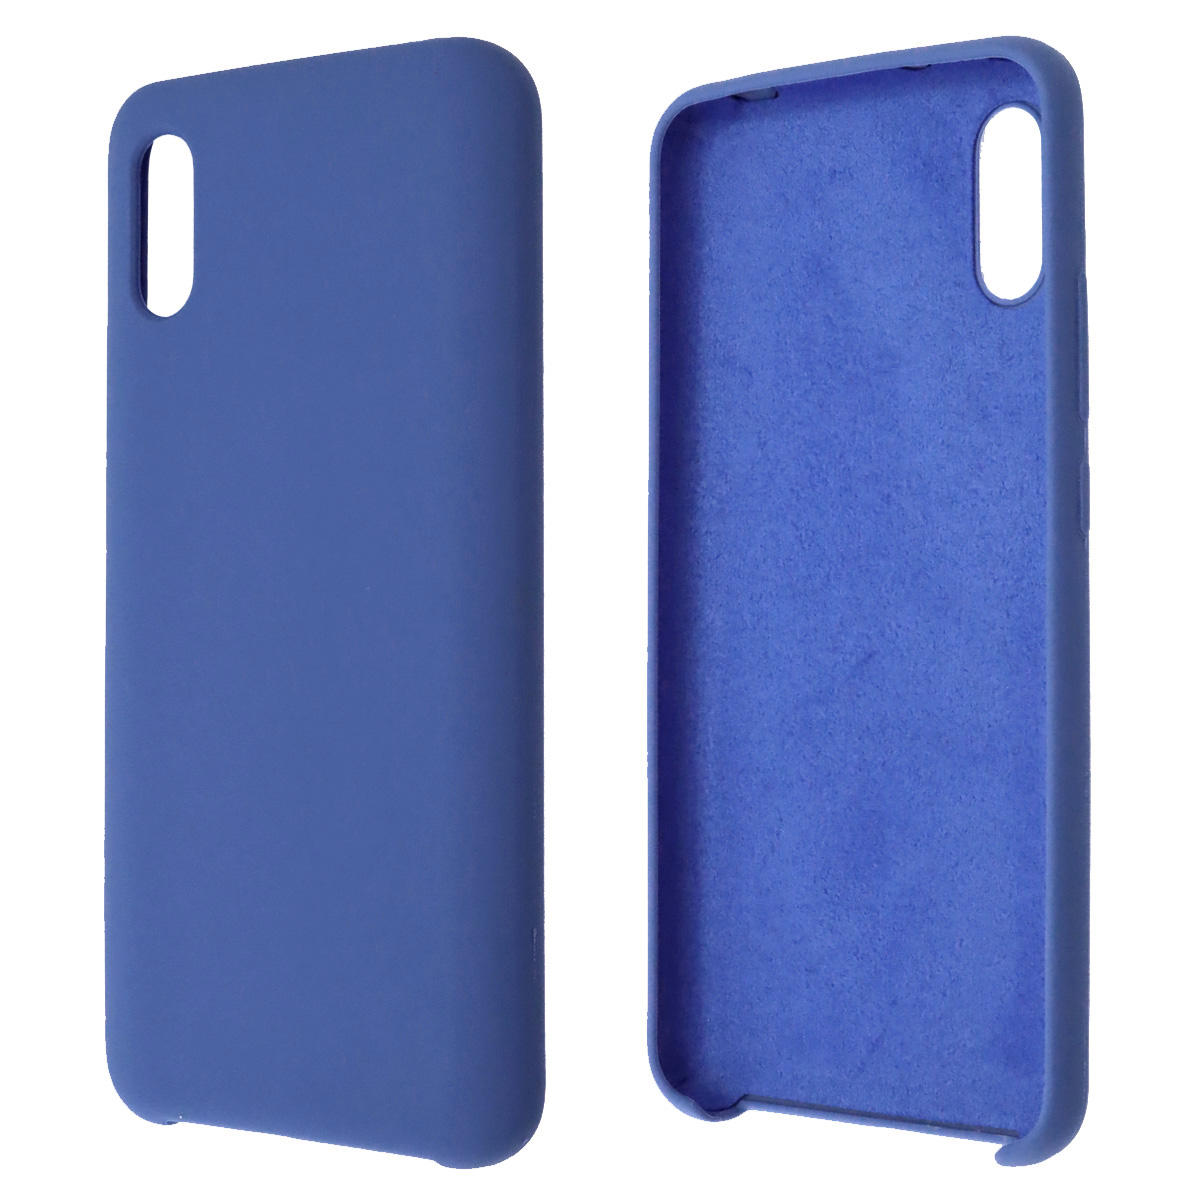 Чехол накладка Silicon Cover для XIAOMI Redmi 9A, силикон, бархат, цвет синий